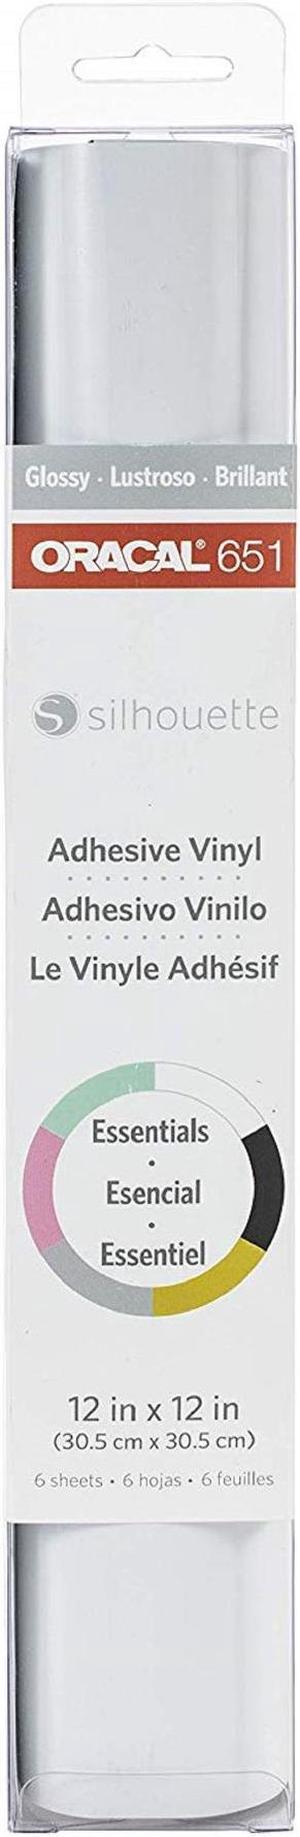 Silhouette America Oracal 651 Vinyl Sample Pack - Essentials